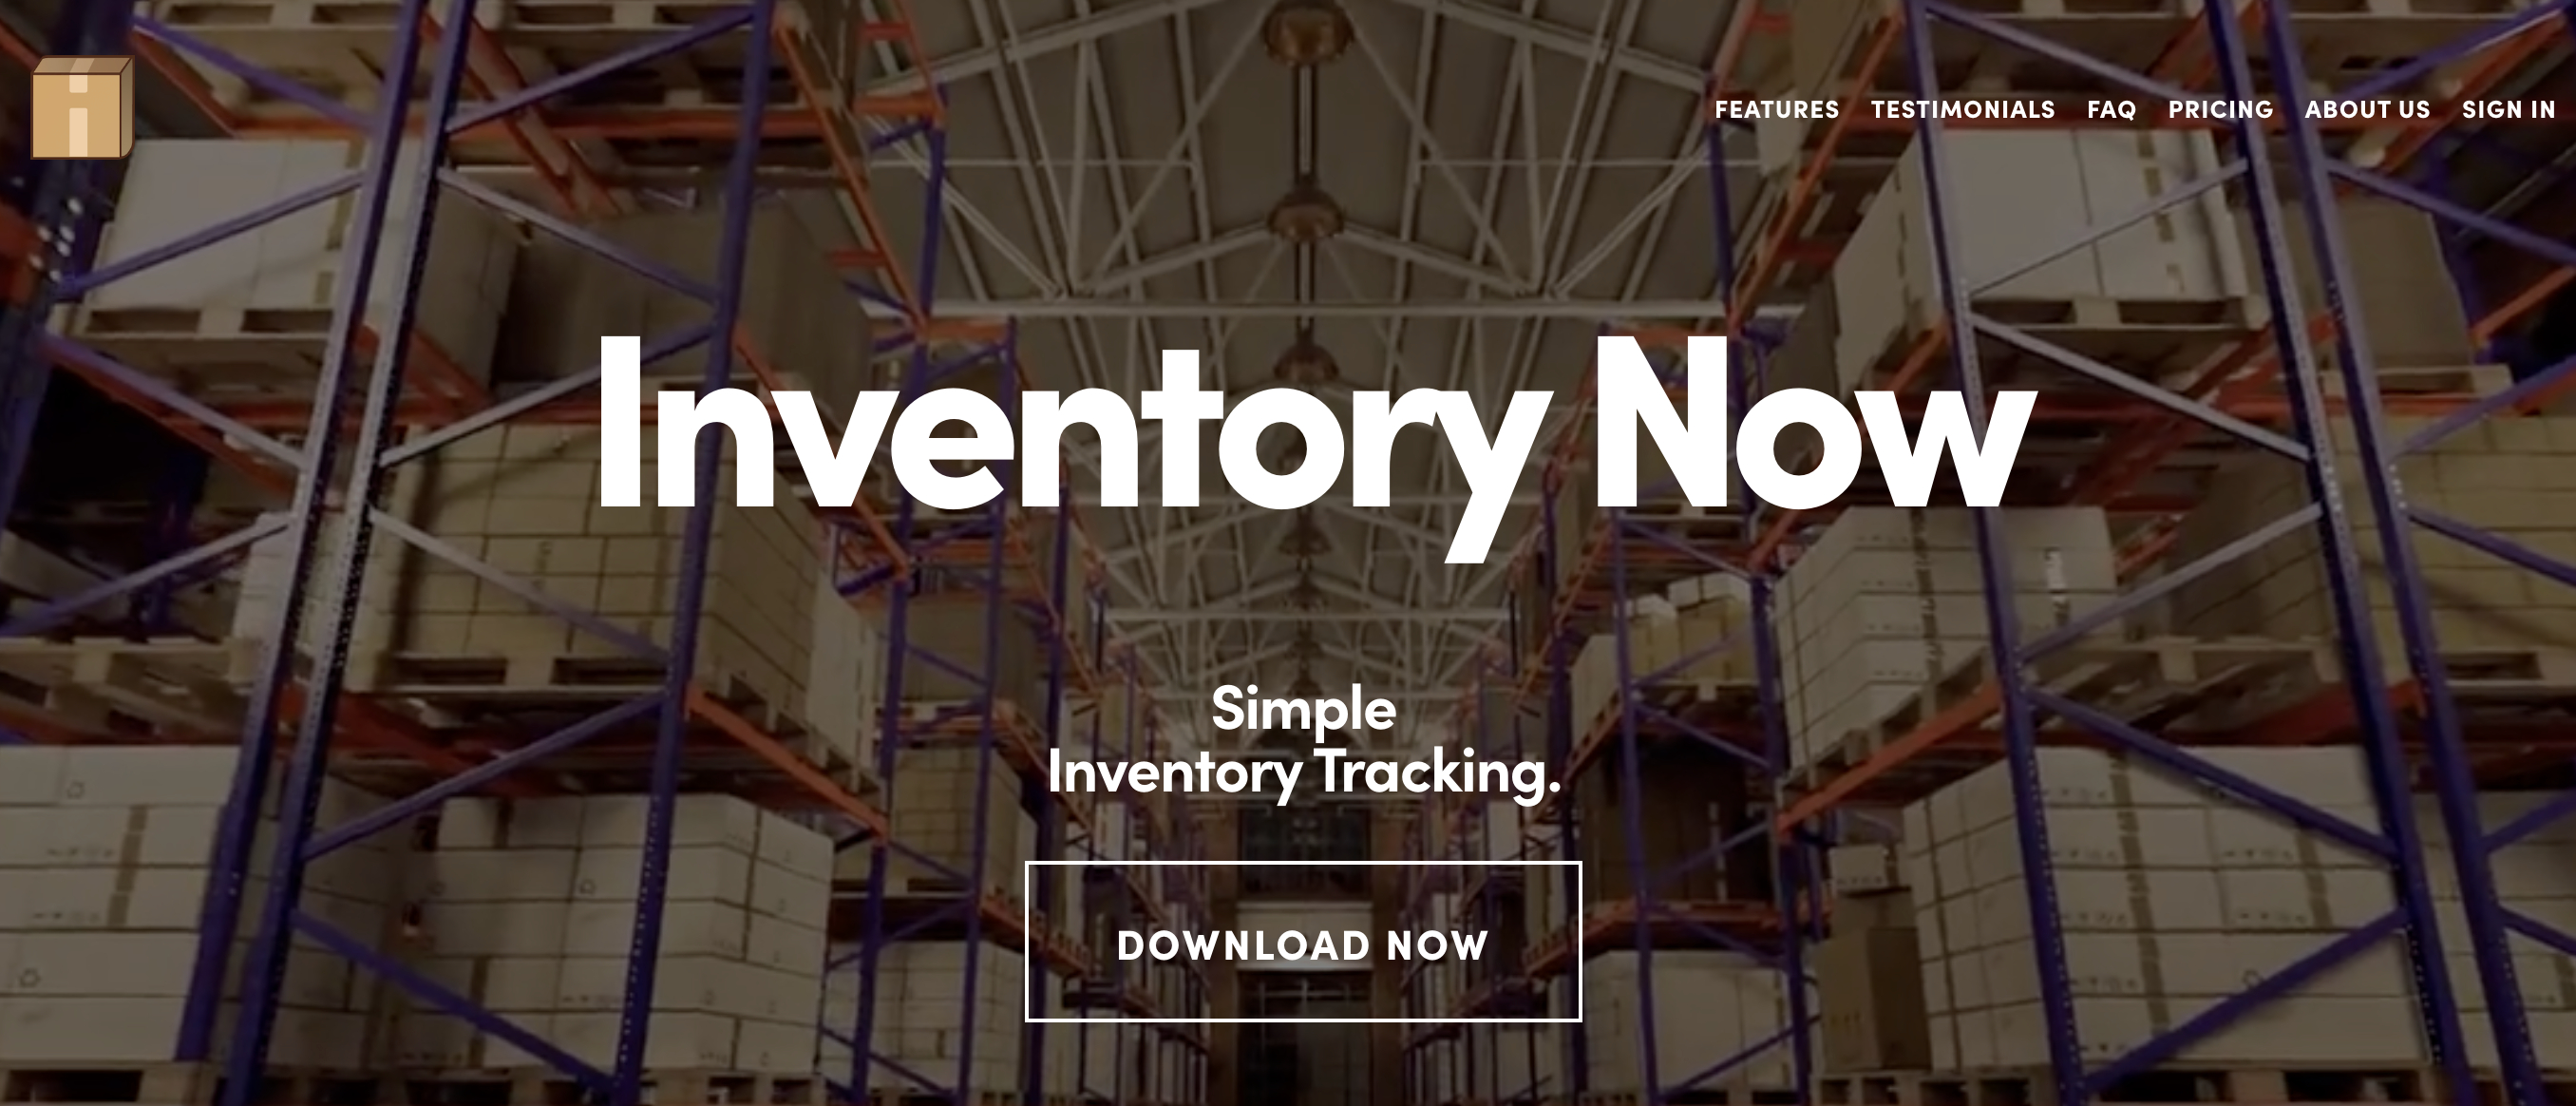 Tool 6 Inventory Now.jpg